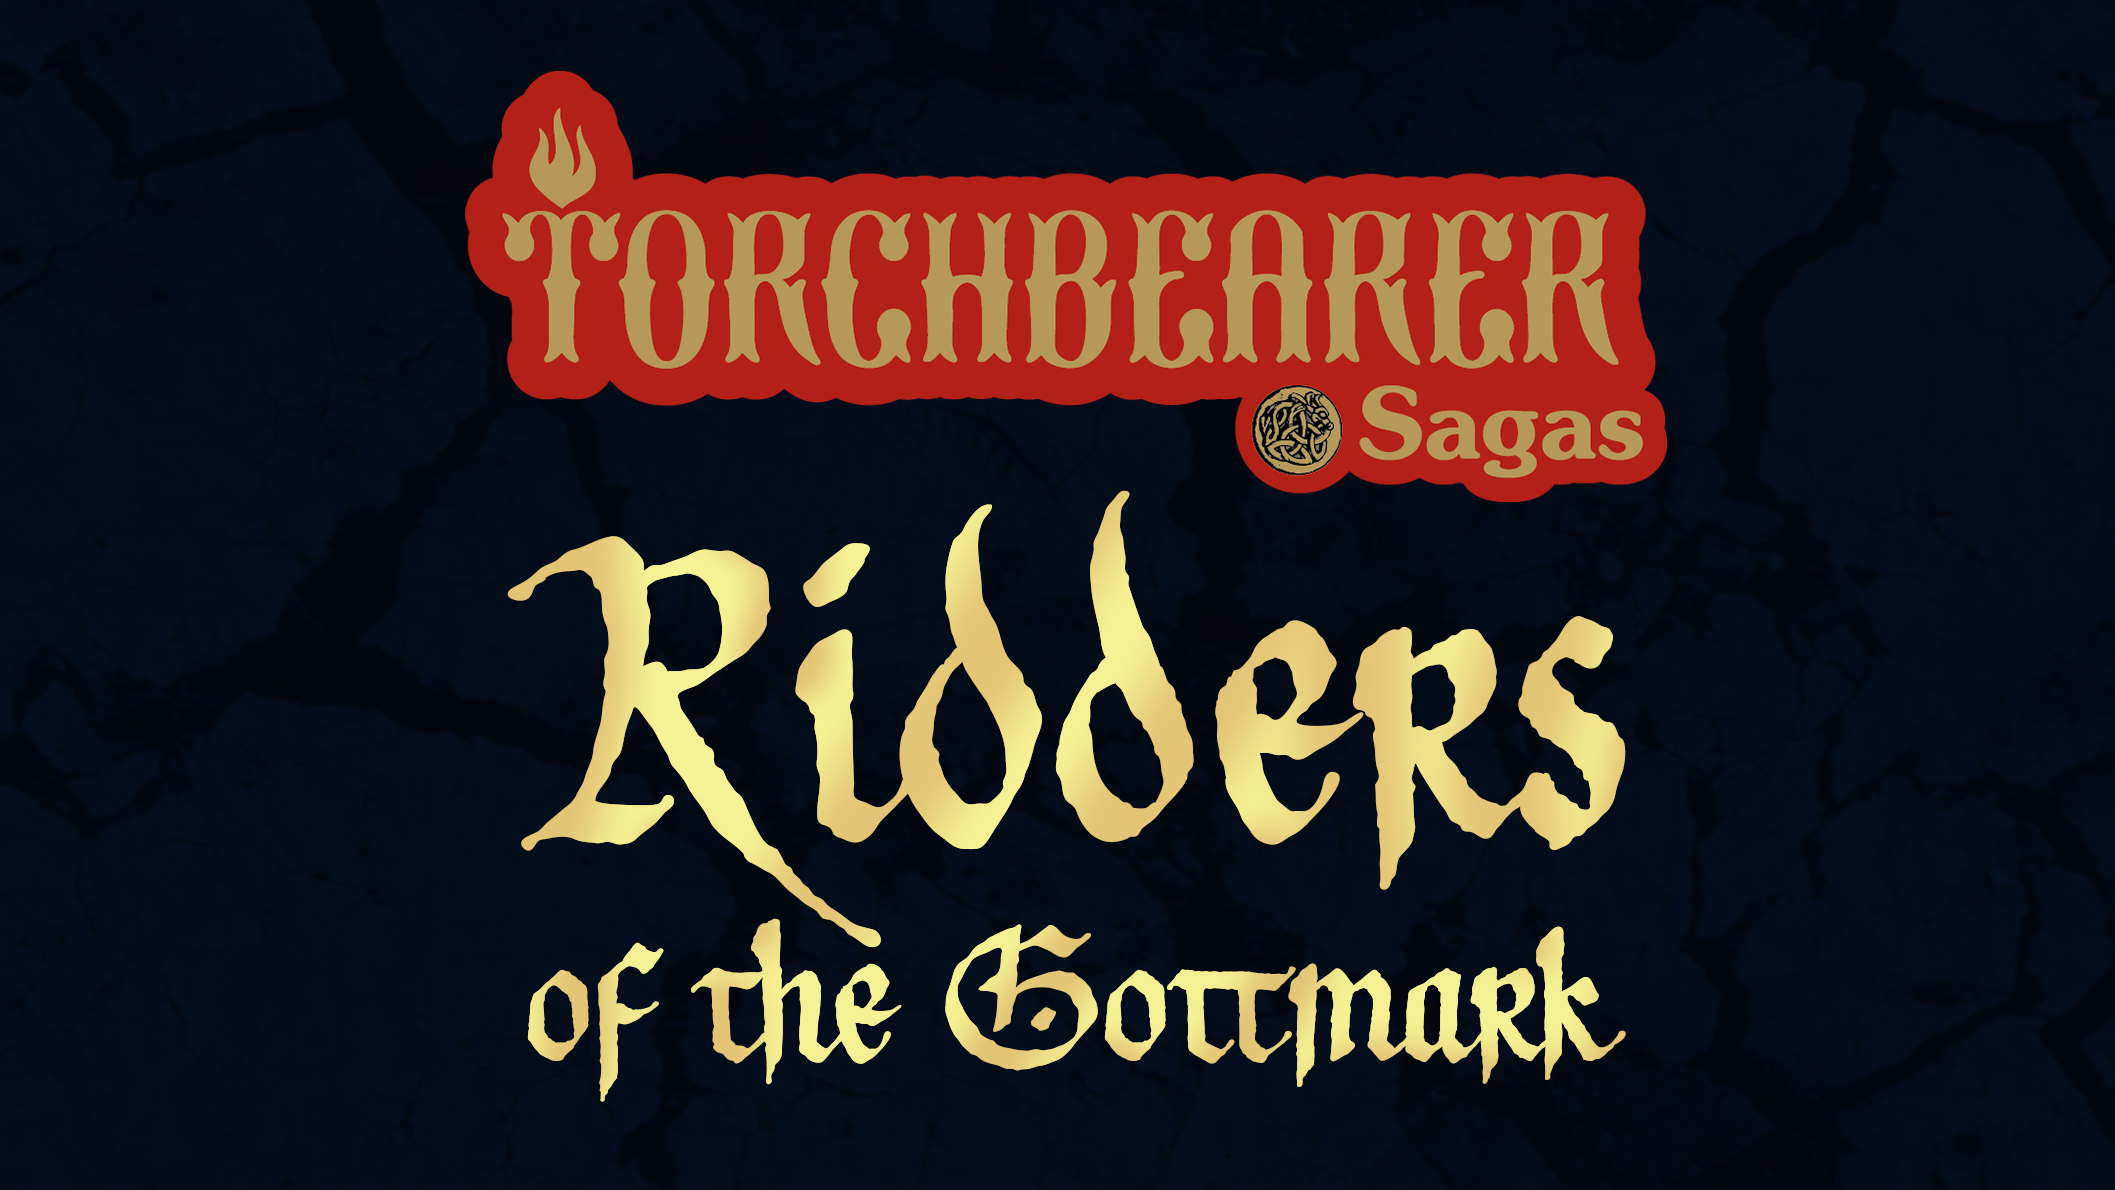 Ridders of the Gottmark Torchbearer Sagas logo